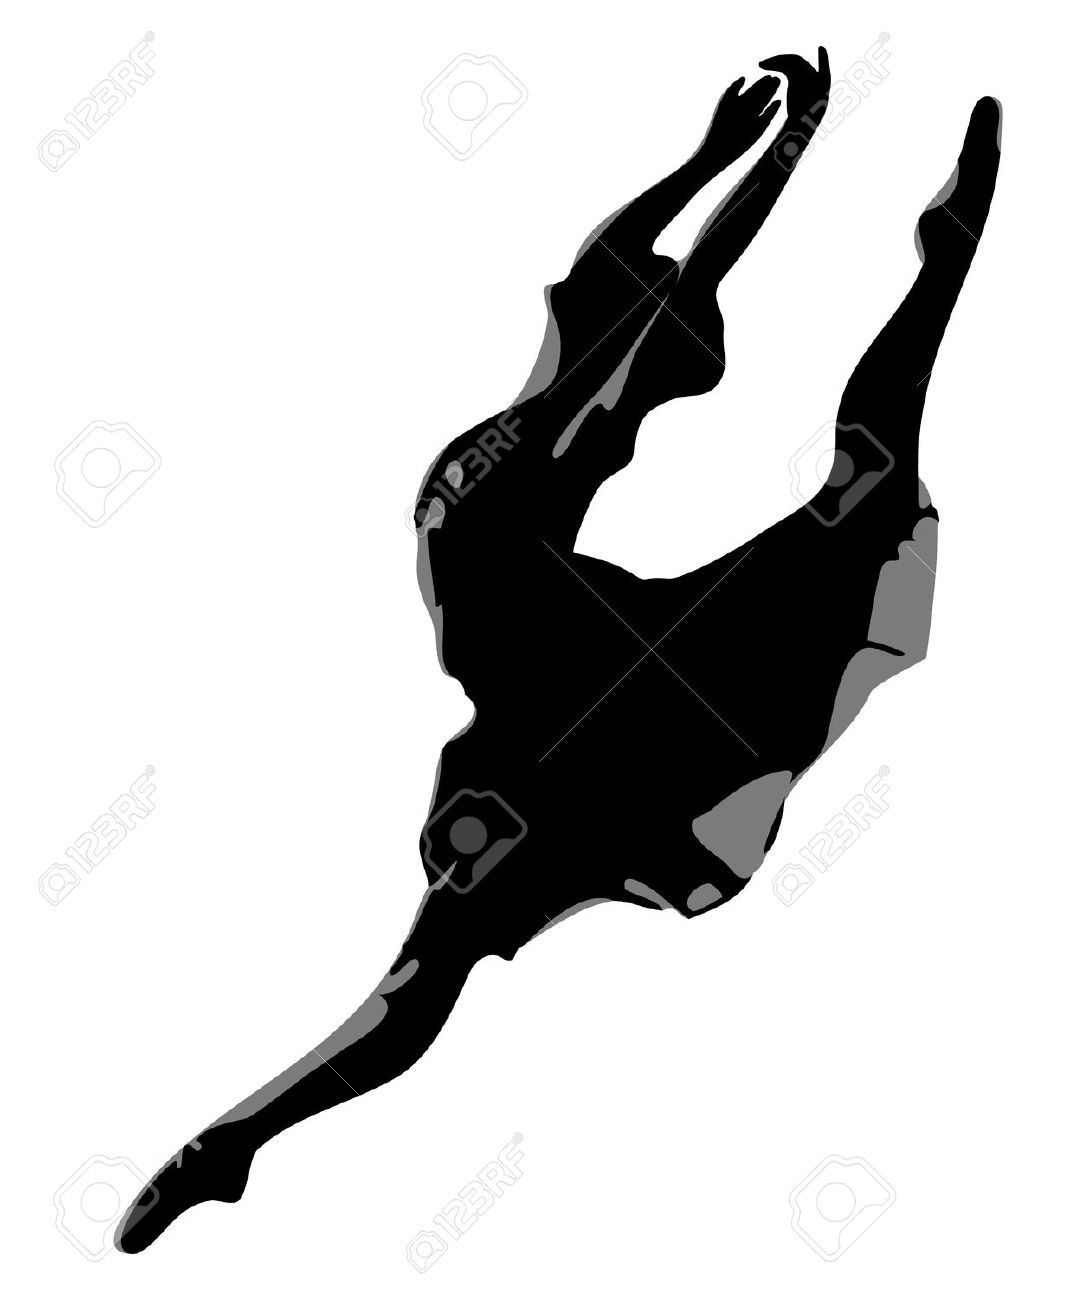 ballerina clipart shadow